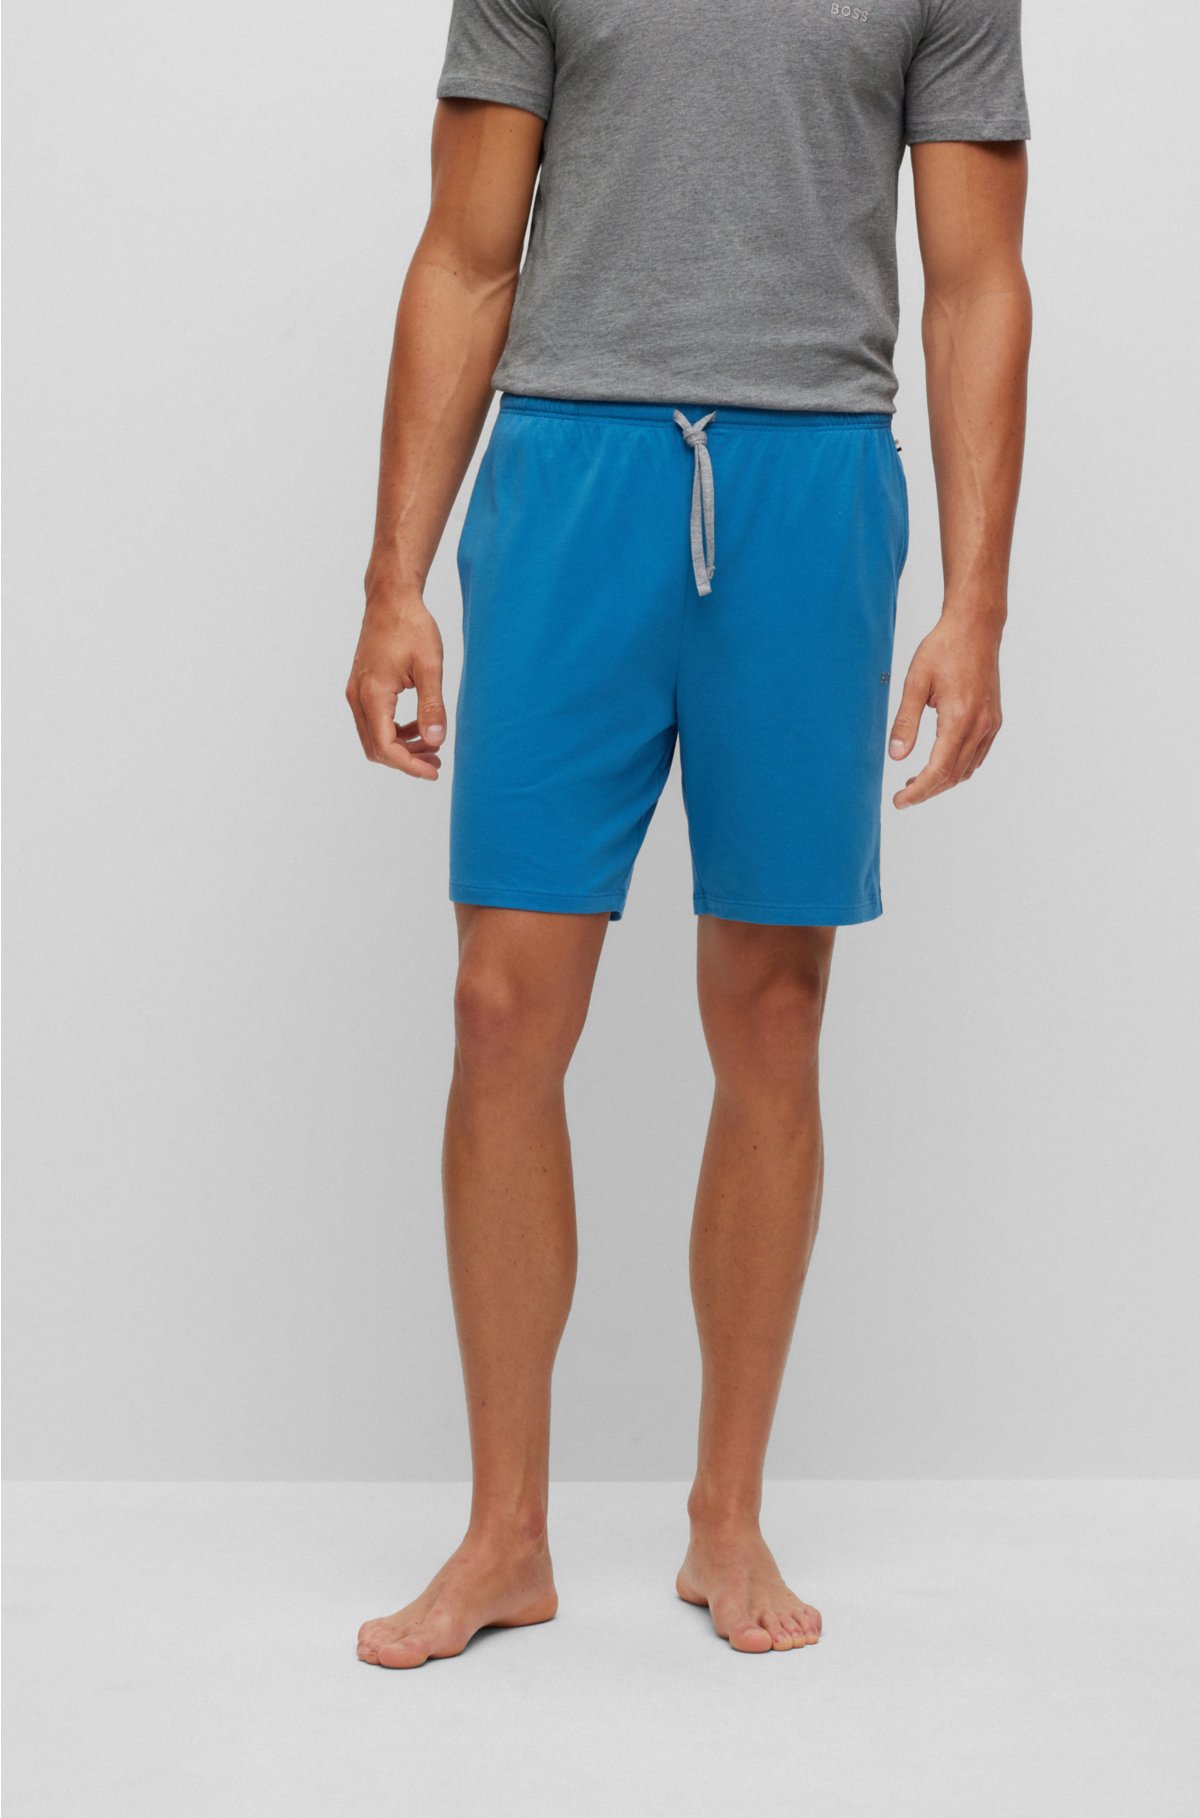 Hugo Boss Sweat Shorts Medium Navy Blue Setowel XL Holiday